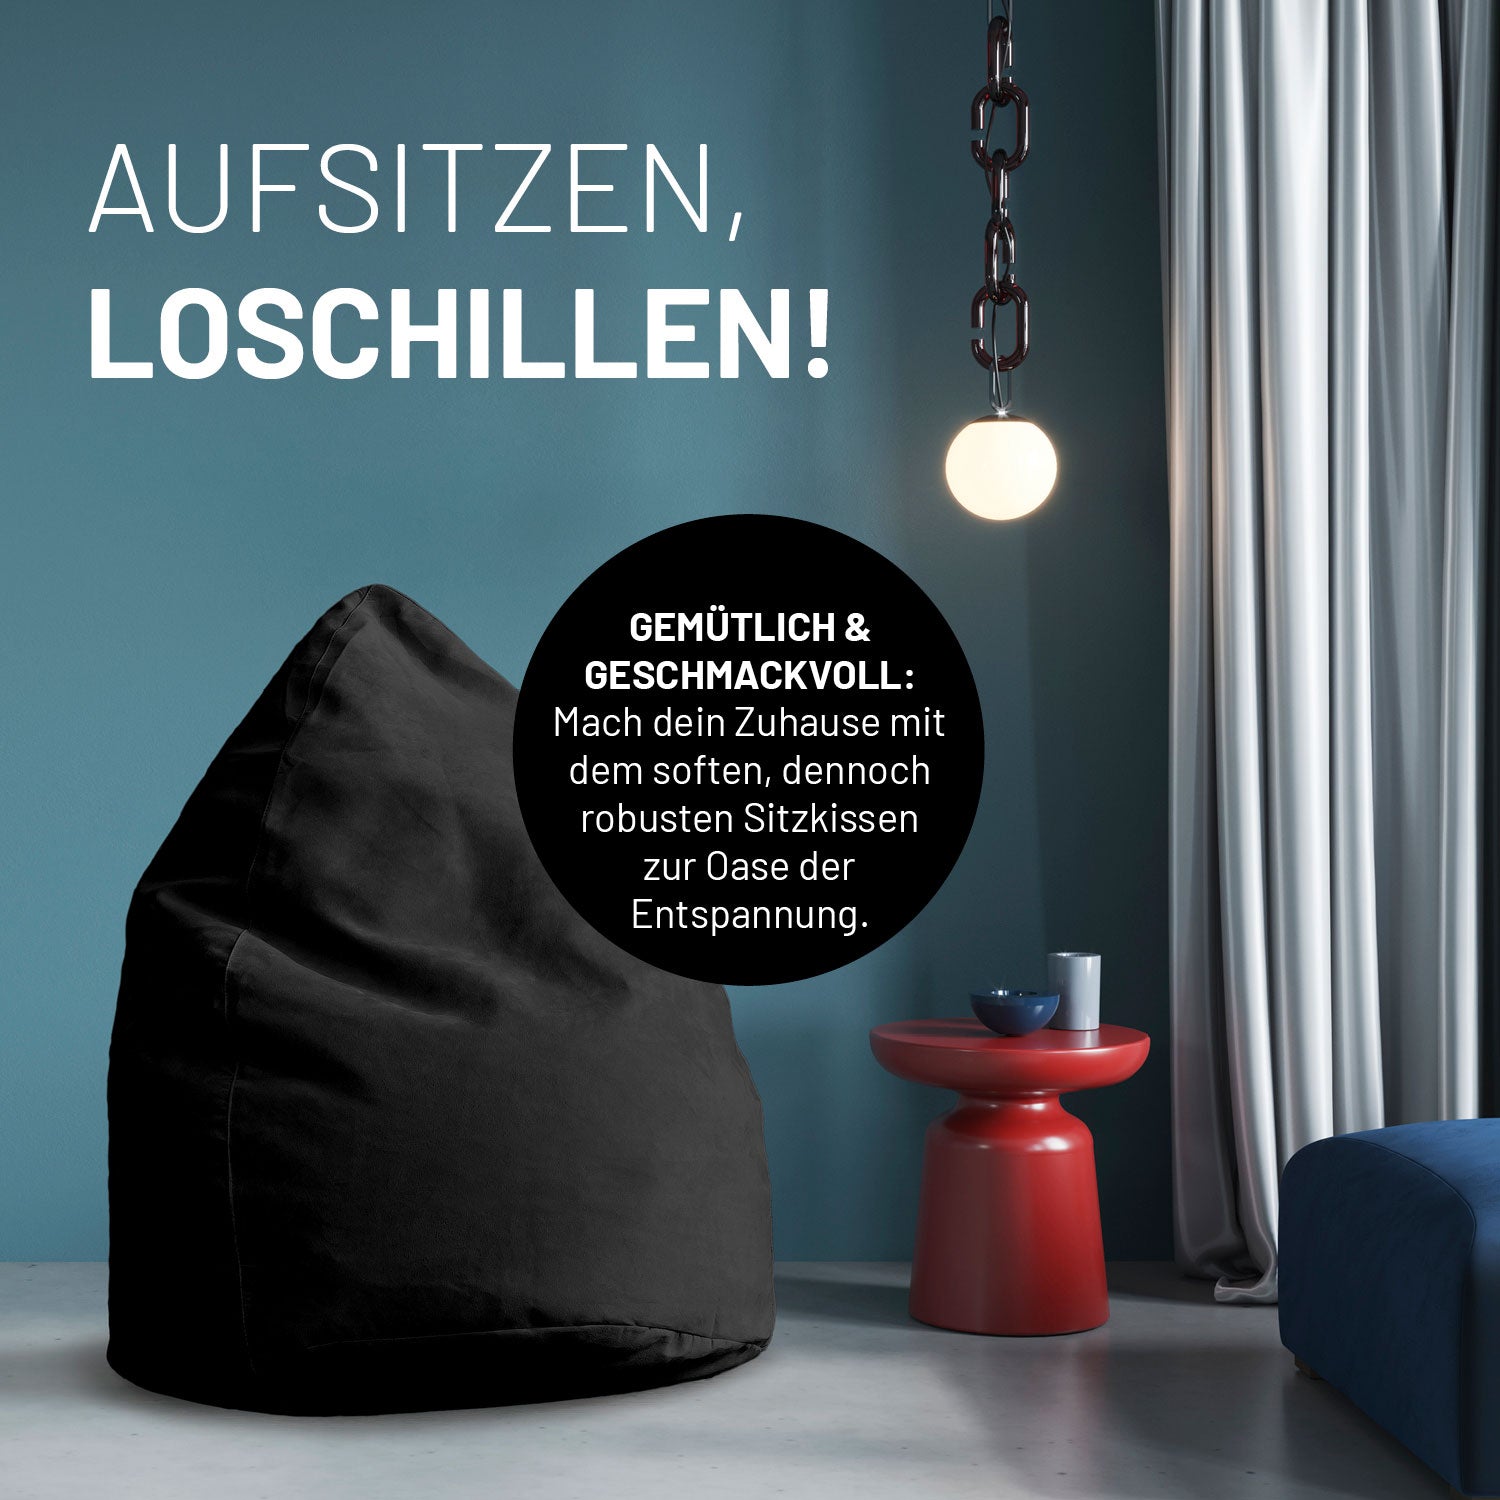 Luxury XL Sitzsack (120 L) - indoor - Schwarz